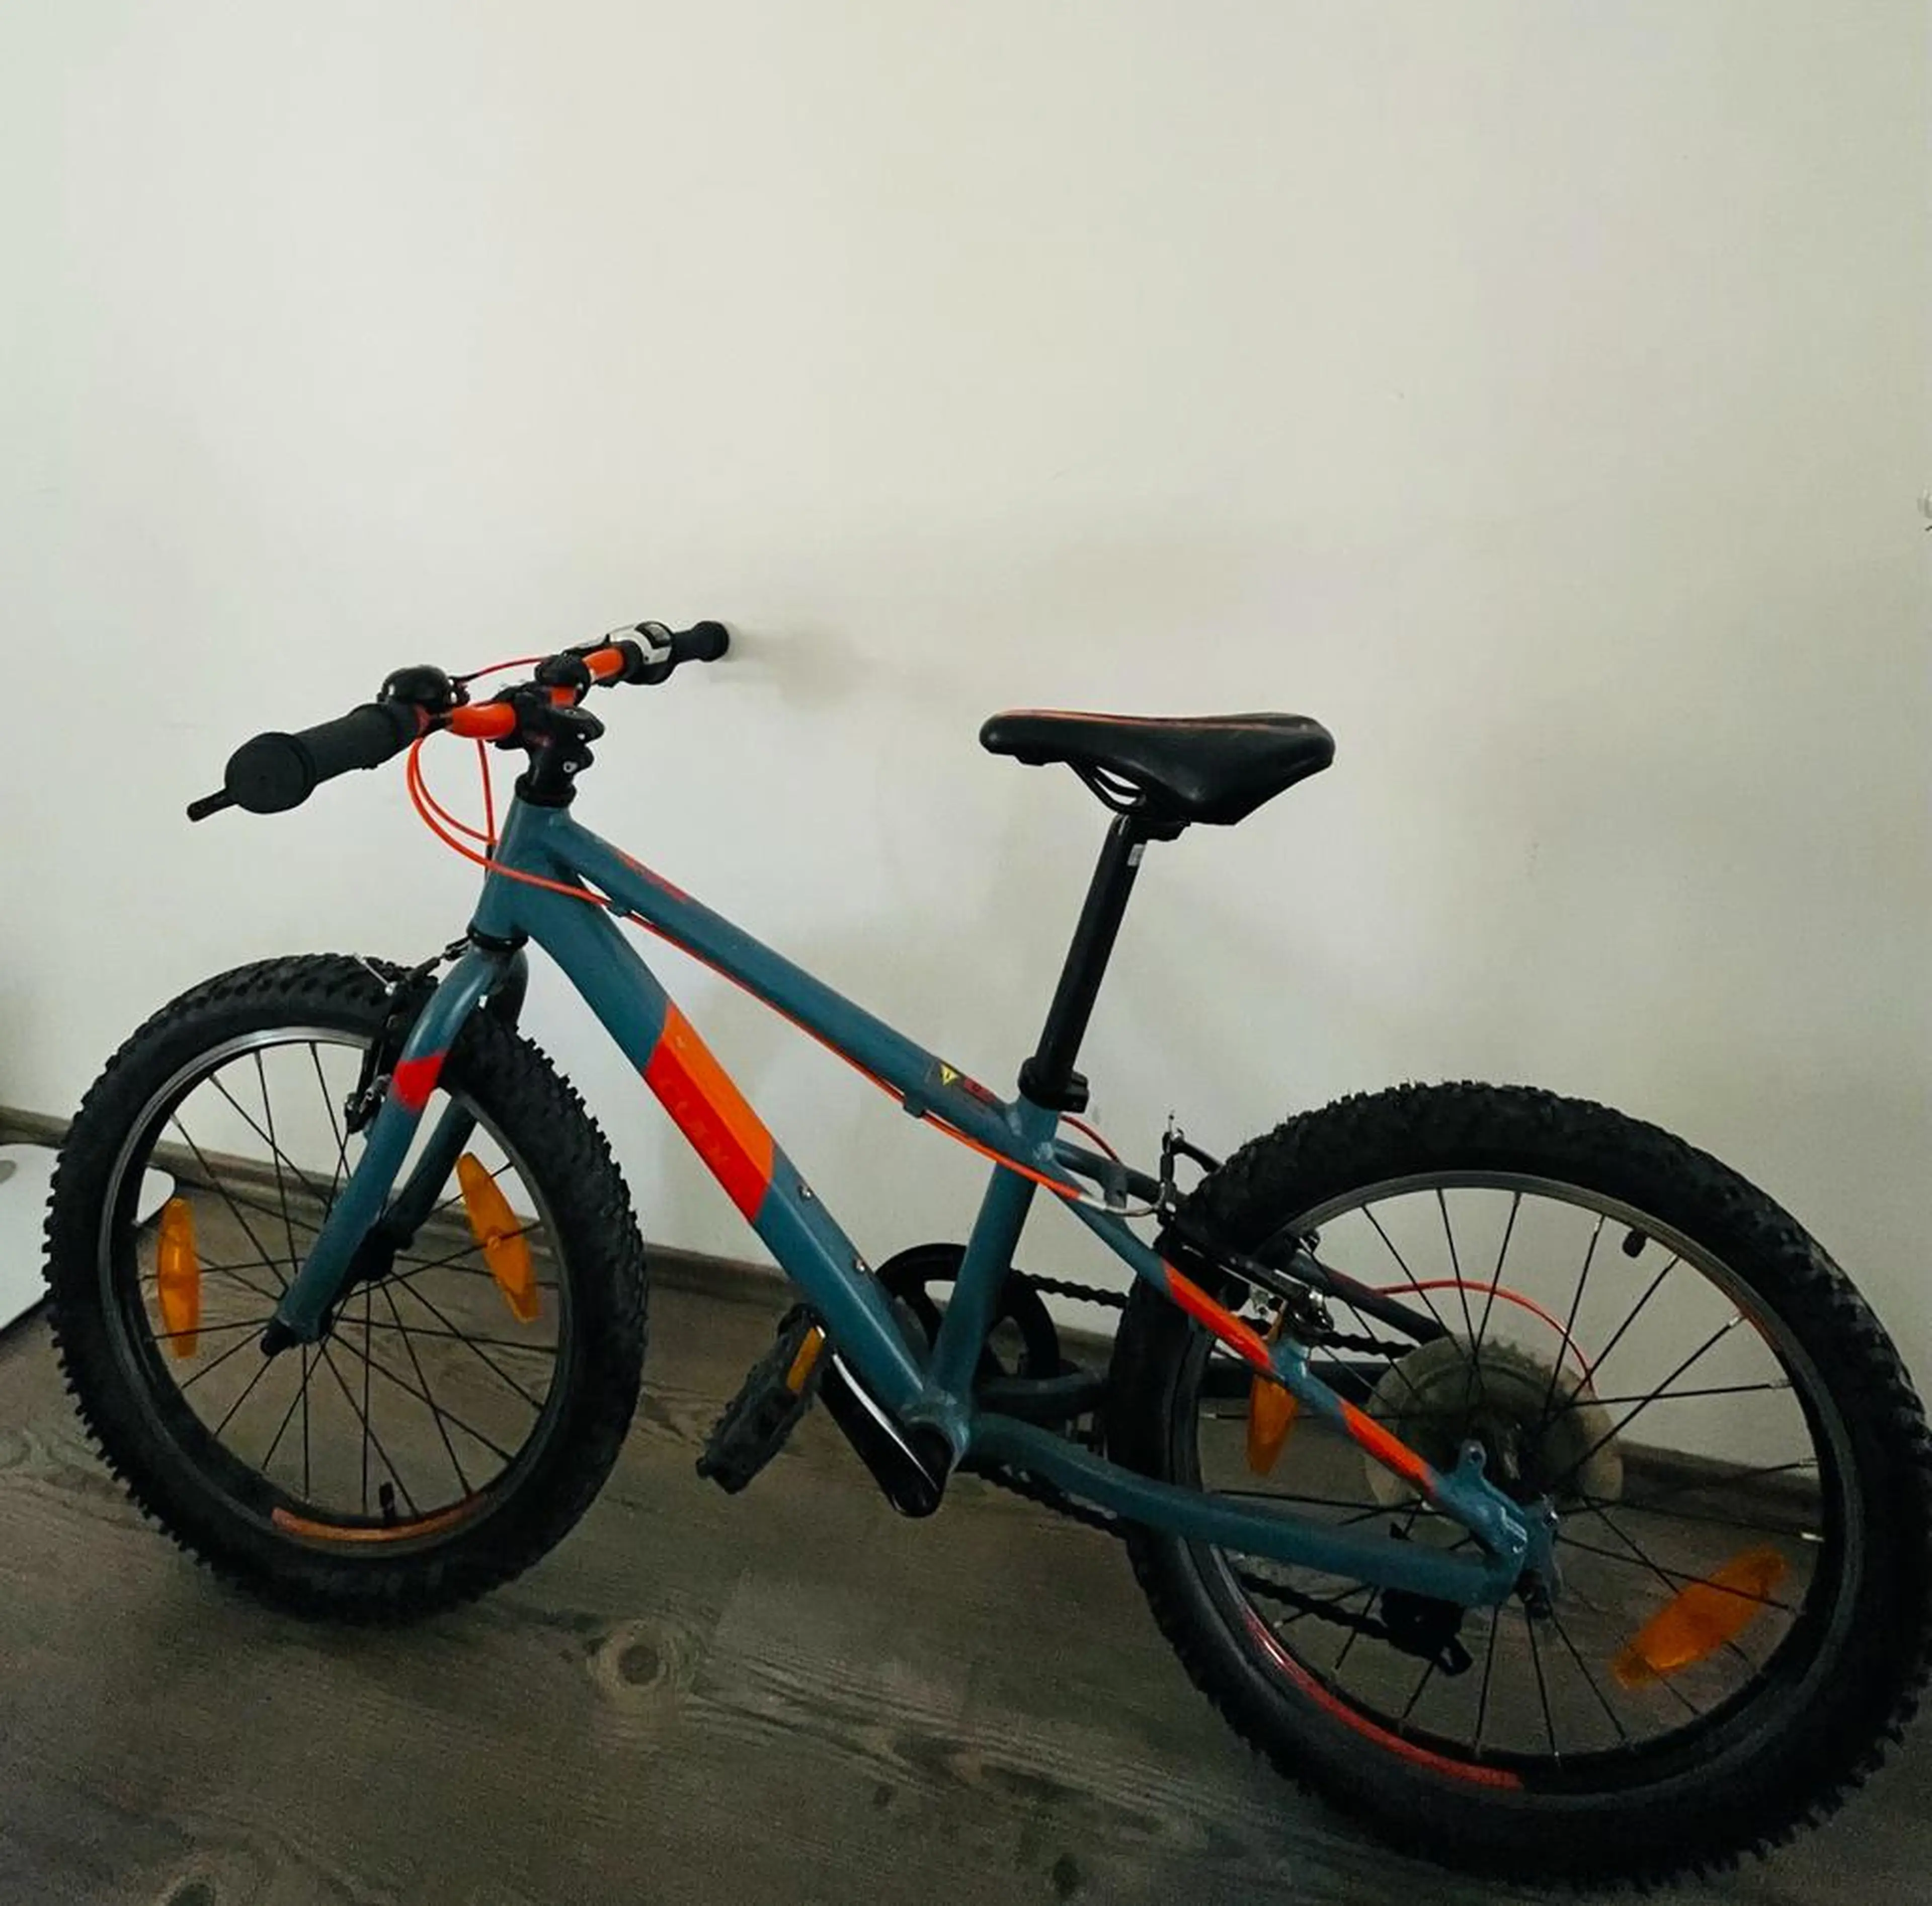 4. Vand Bicicleta Cube Acid 200, 20 inch, Grey - Orange